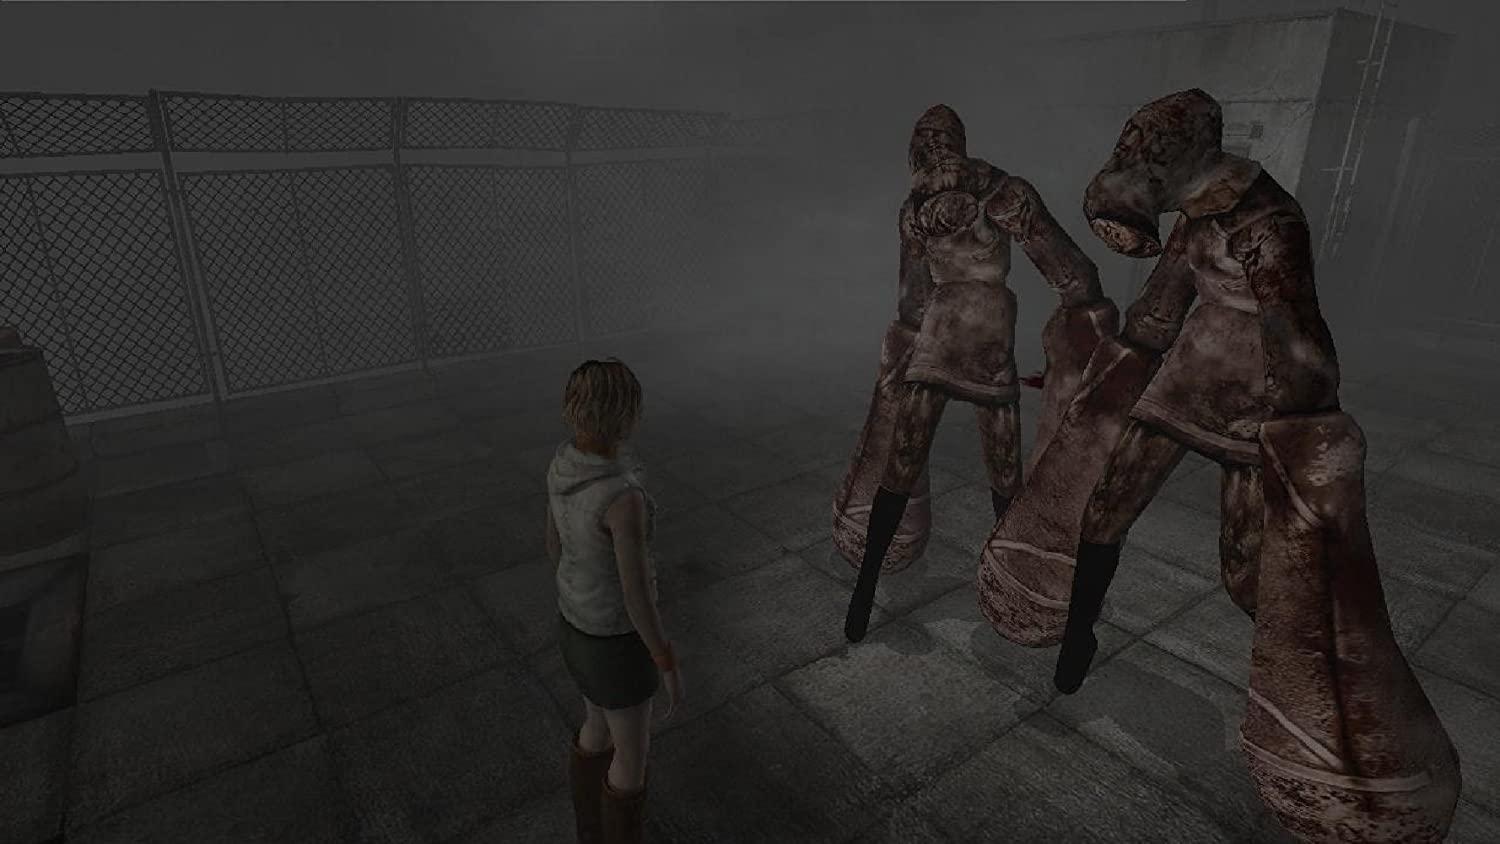 Silent Hill Games 